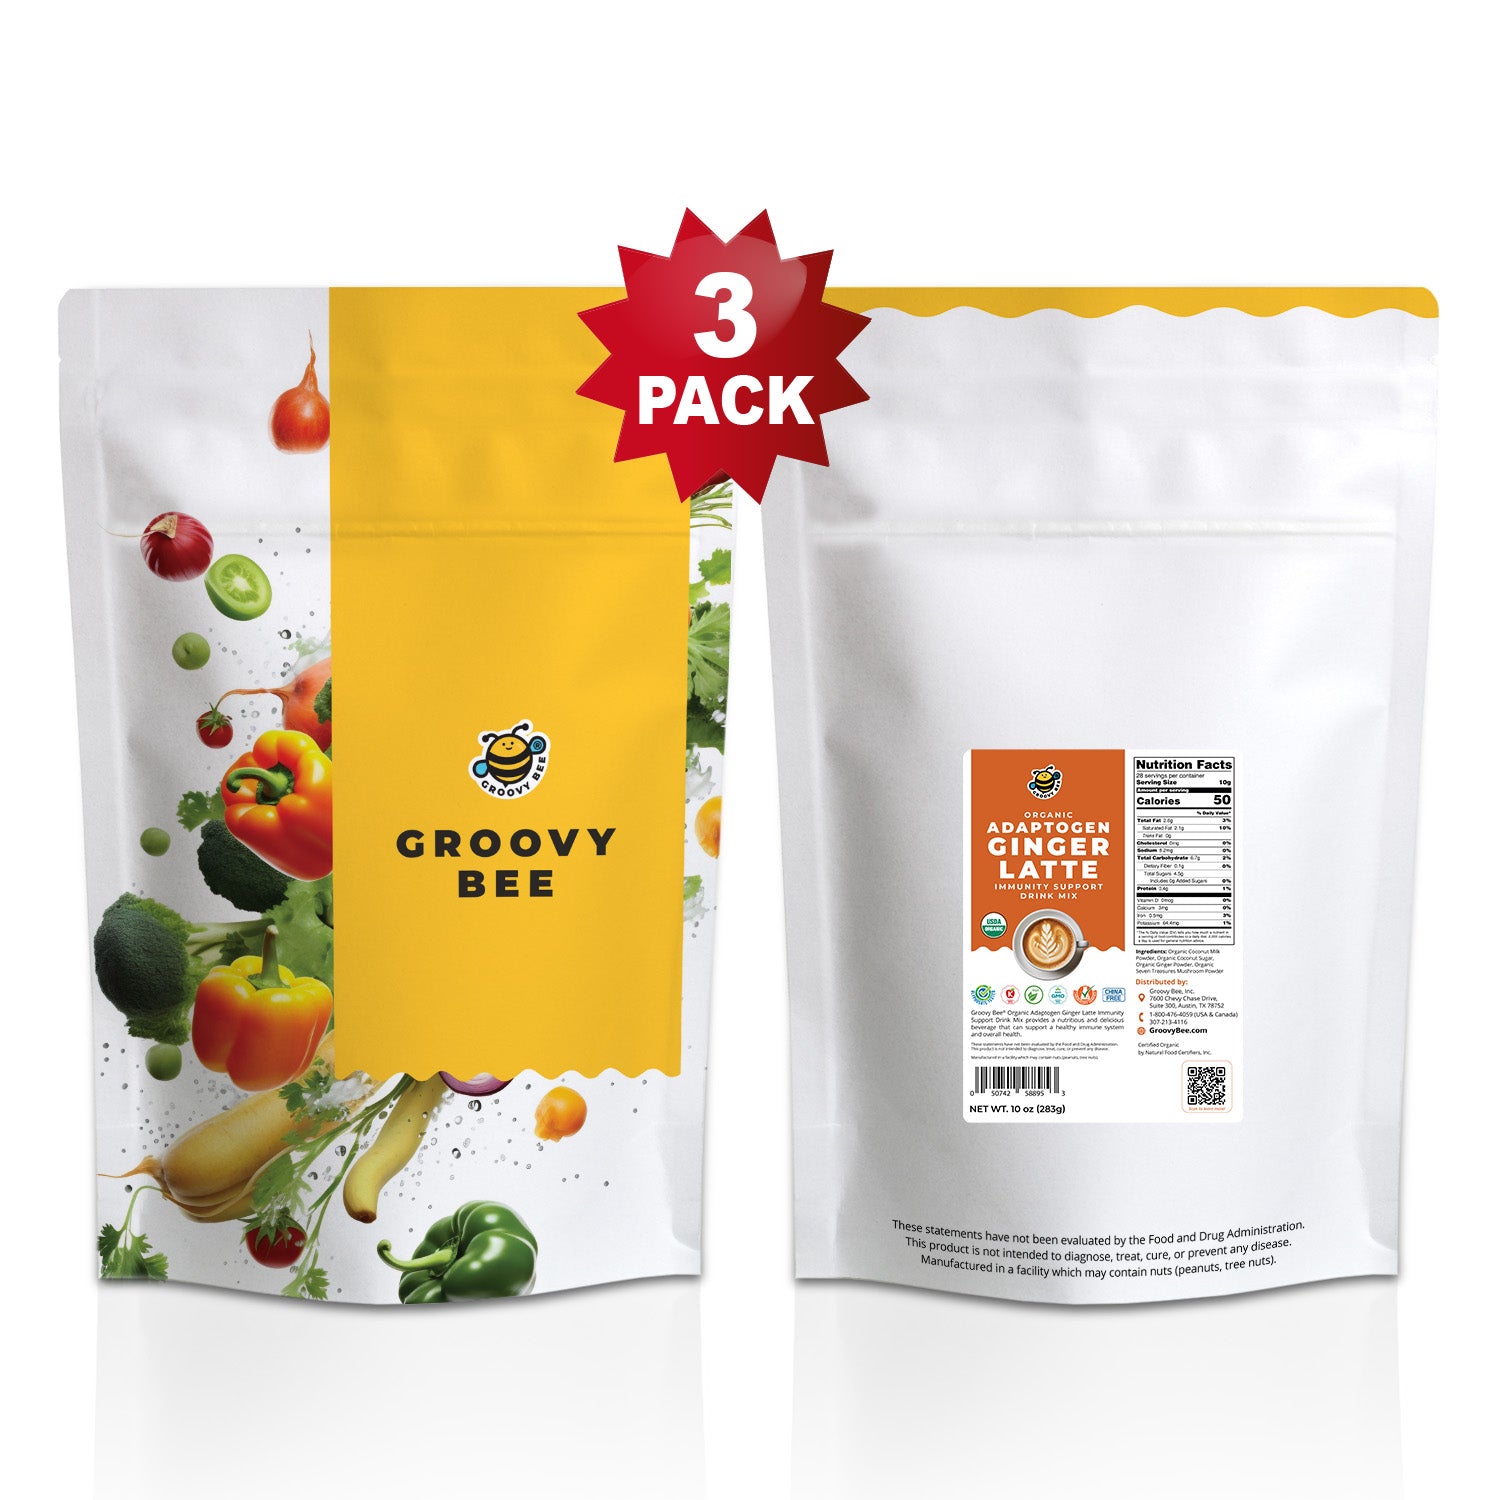 Organic Adaptogen Ginger Latte - Immune Support Drink Mix 10 oz (283g) (3-Pack)